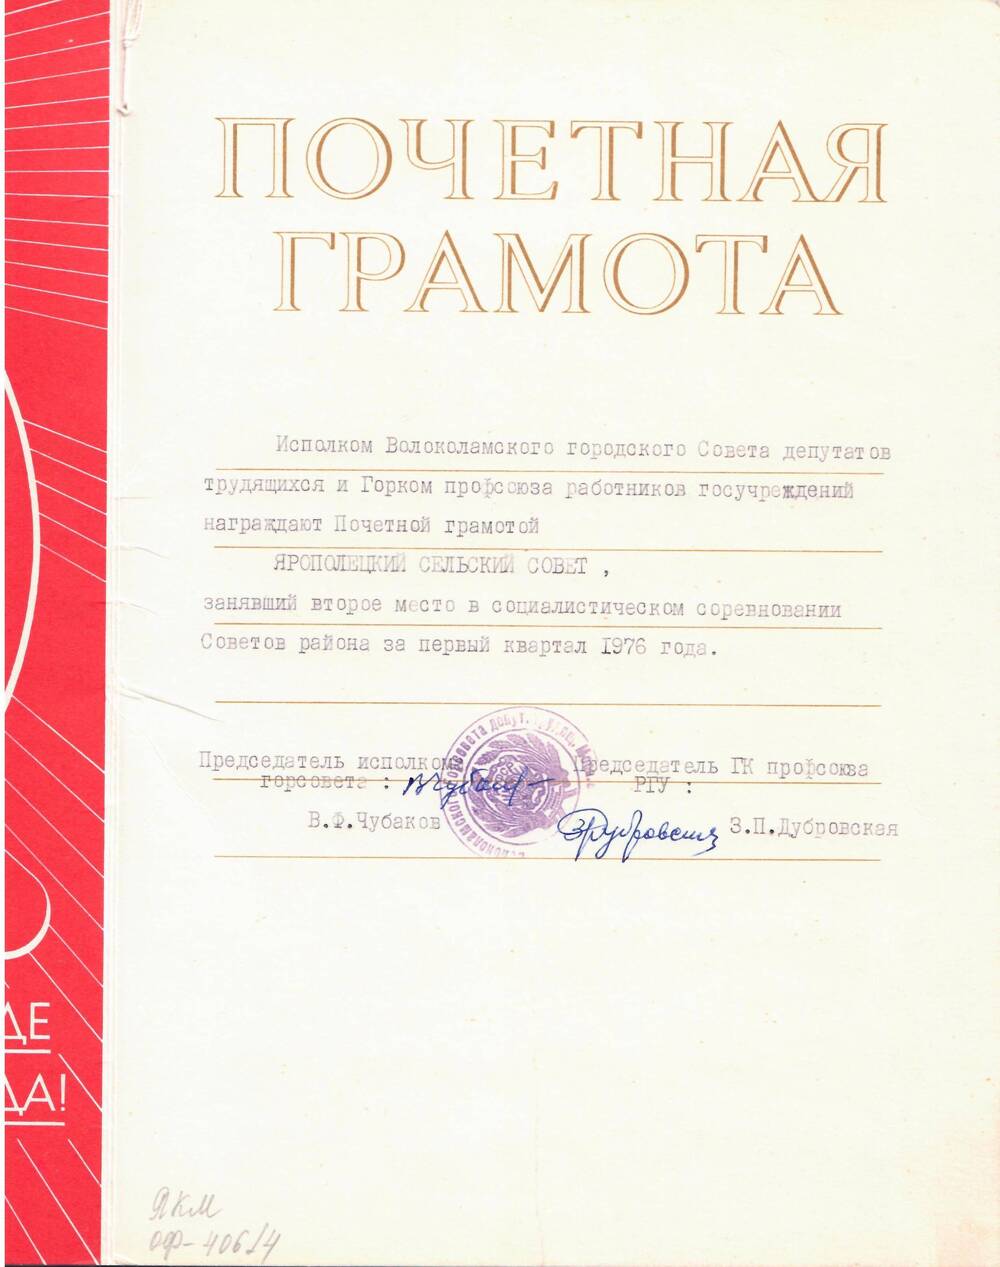 Почетная грамота, награжден Ярополецкий с/совет, занявший II место в соц. соревнованиях за I квартал 1976 г.